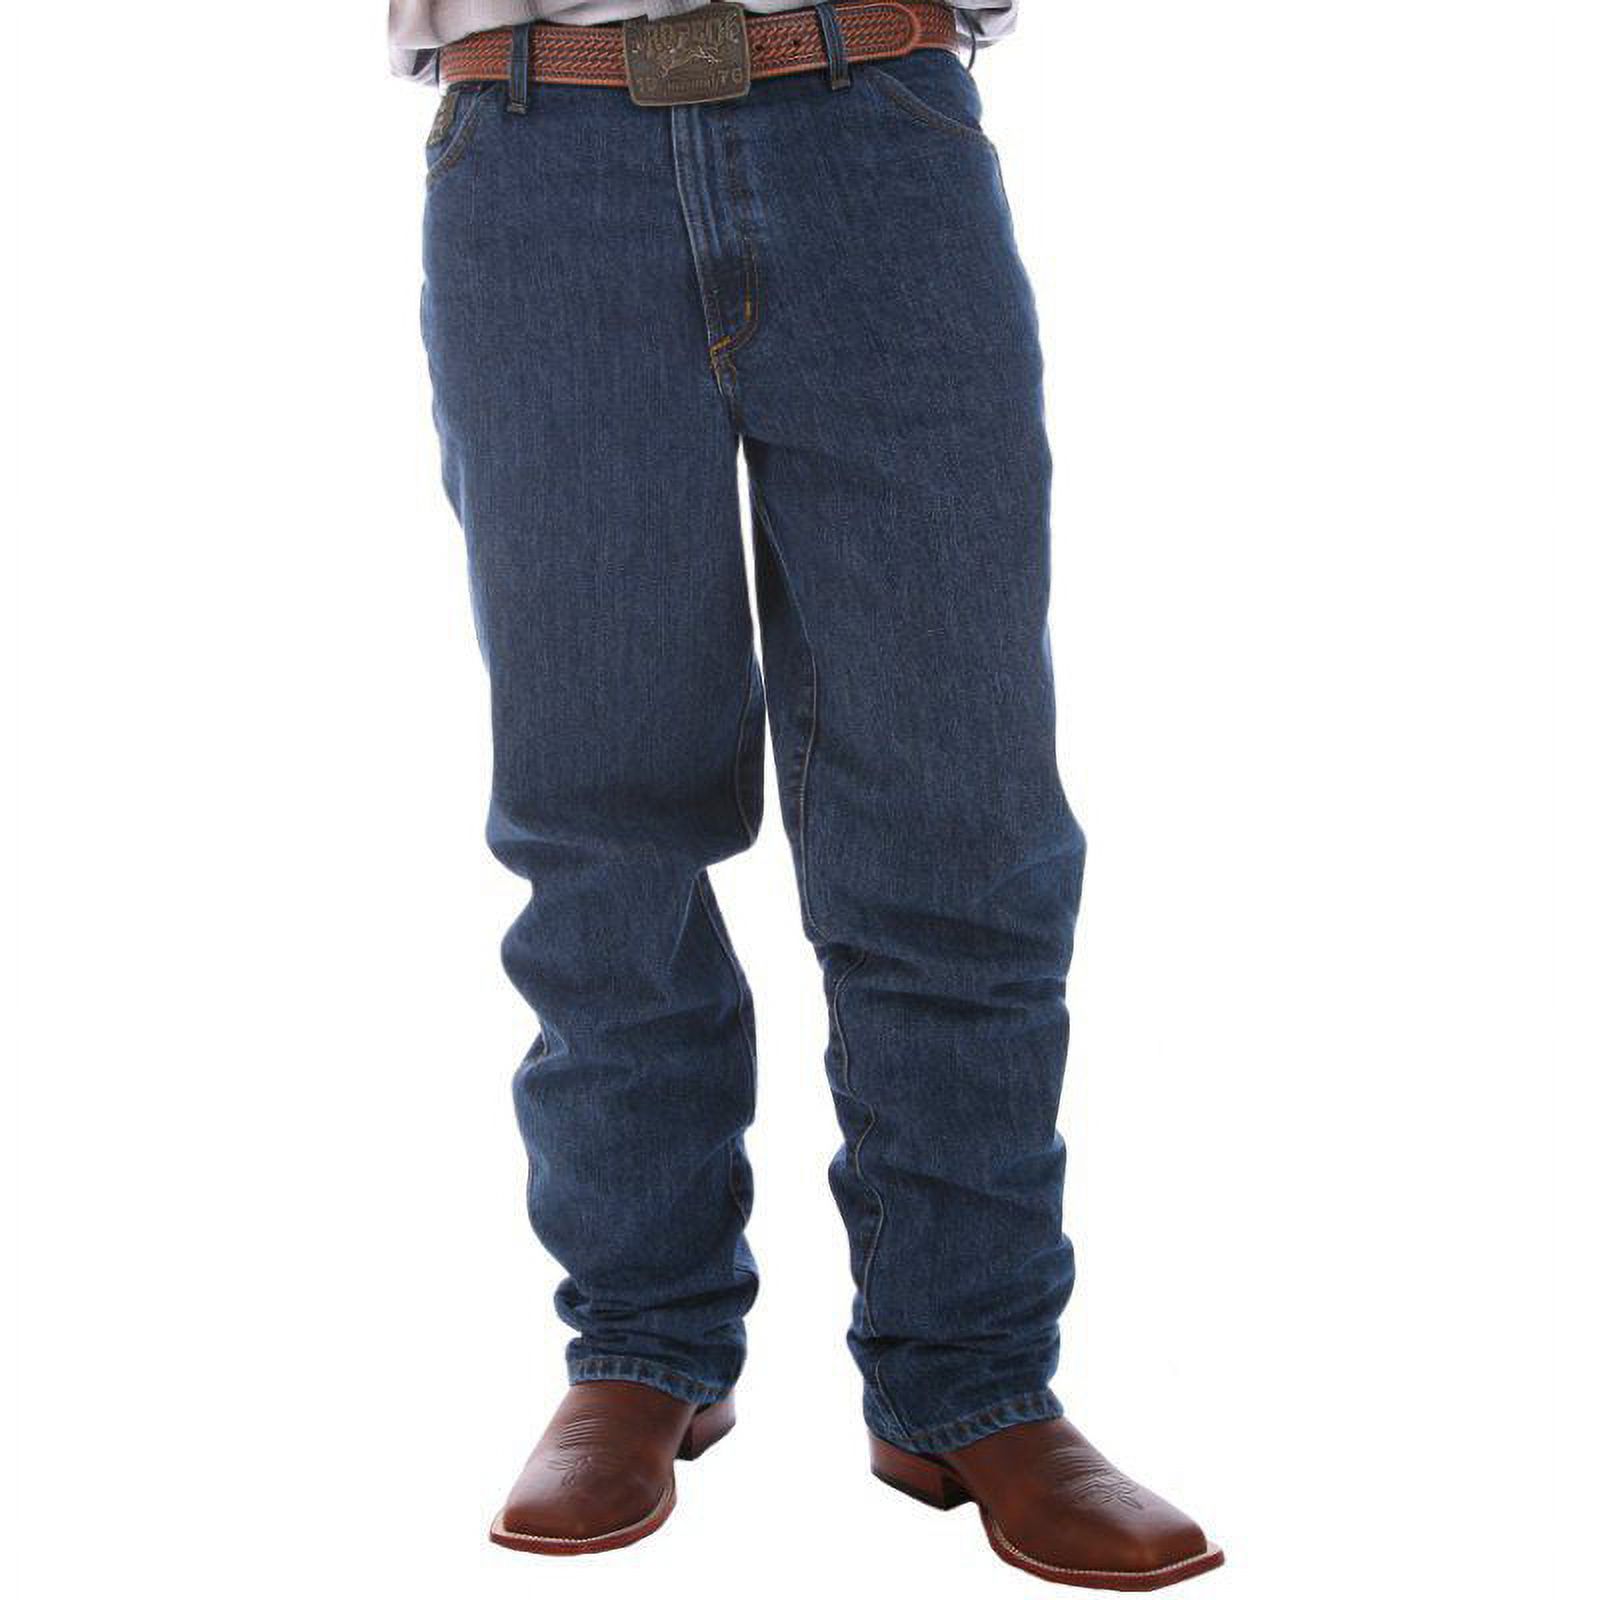 Cinch Apparel Mens Green Label Original Fit Jeans 33W x 40L Dark Stonewash - image 4 of 4